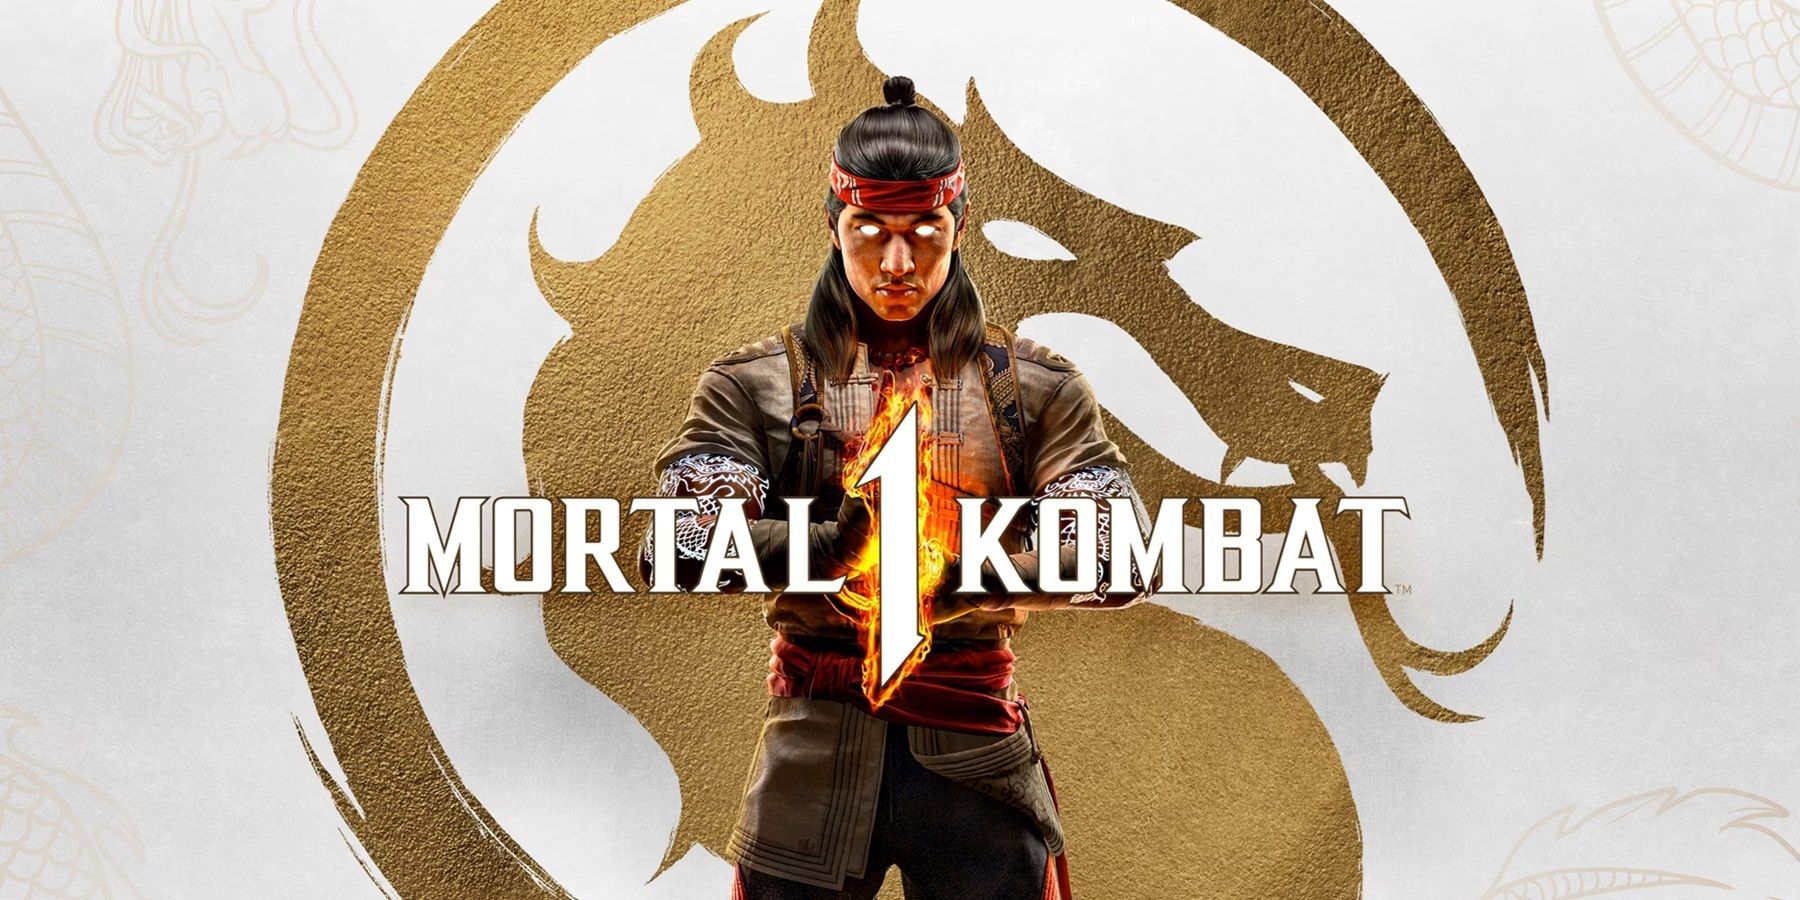 Mortal Kombat 11 cross-play is possibly coming soon